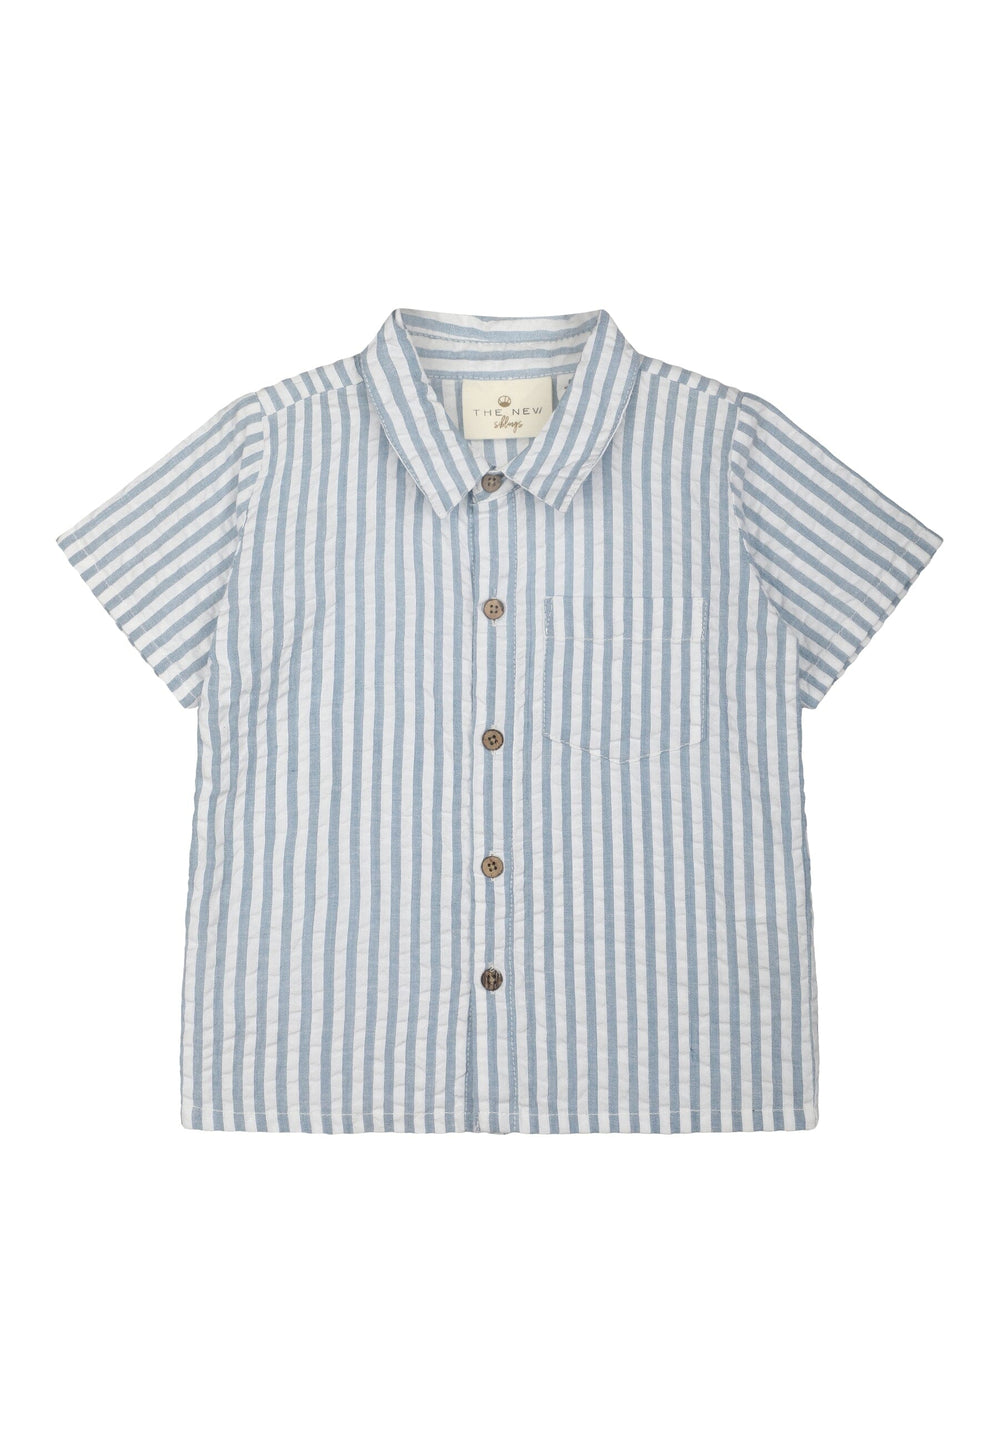 The New - Tnkai S_s Shirt - Blue Fog Skjorter 